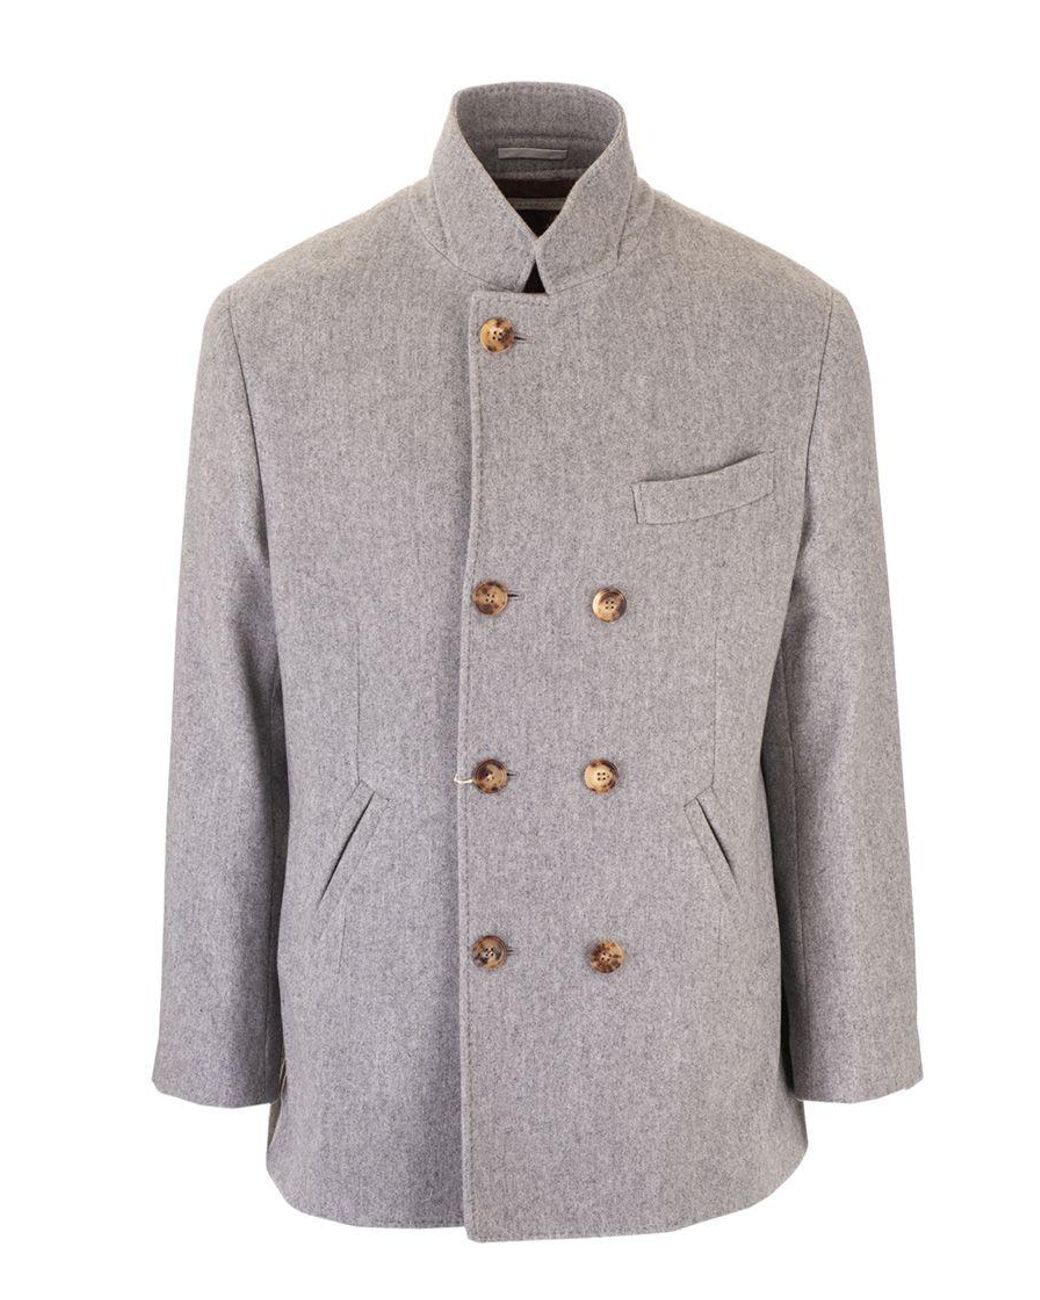 Brunello Cucinelli Wool Coat in Grey (Gray) for Men - Lyst